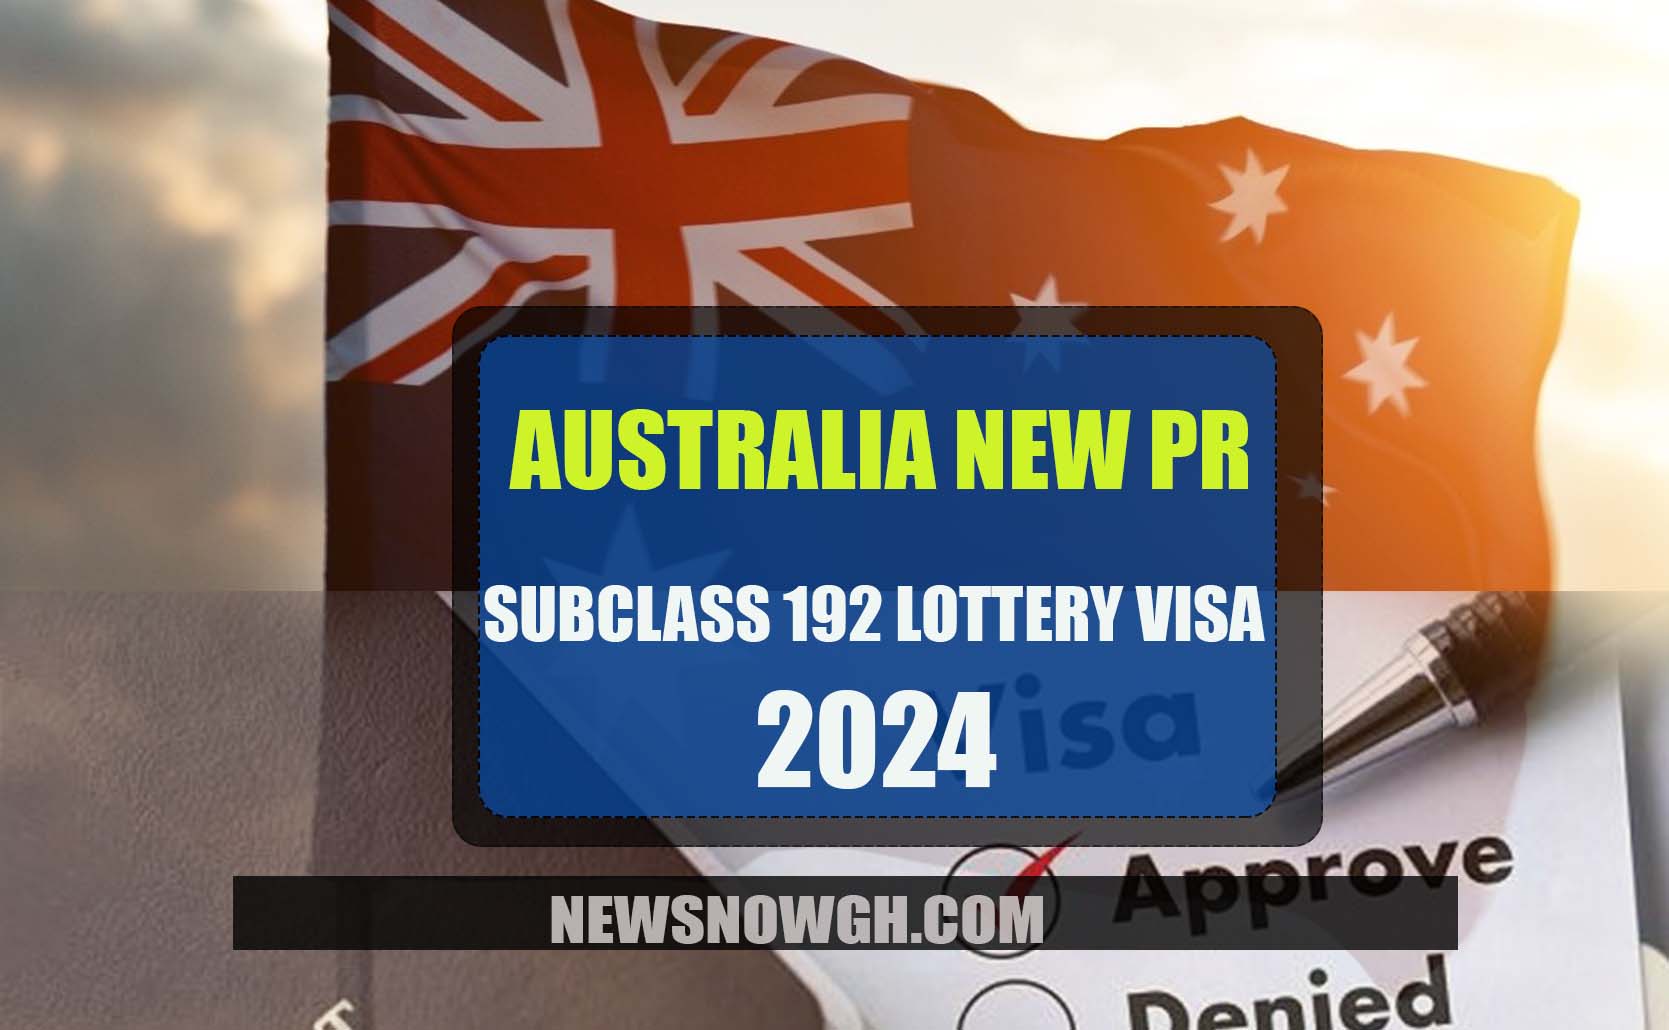 Australia New PR Subclass 192 Lottery Visa 2024 Australia PR